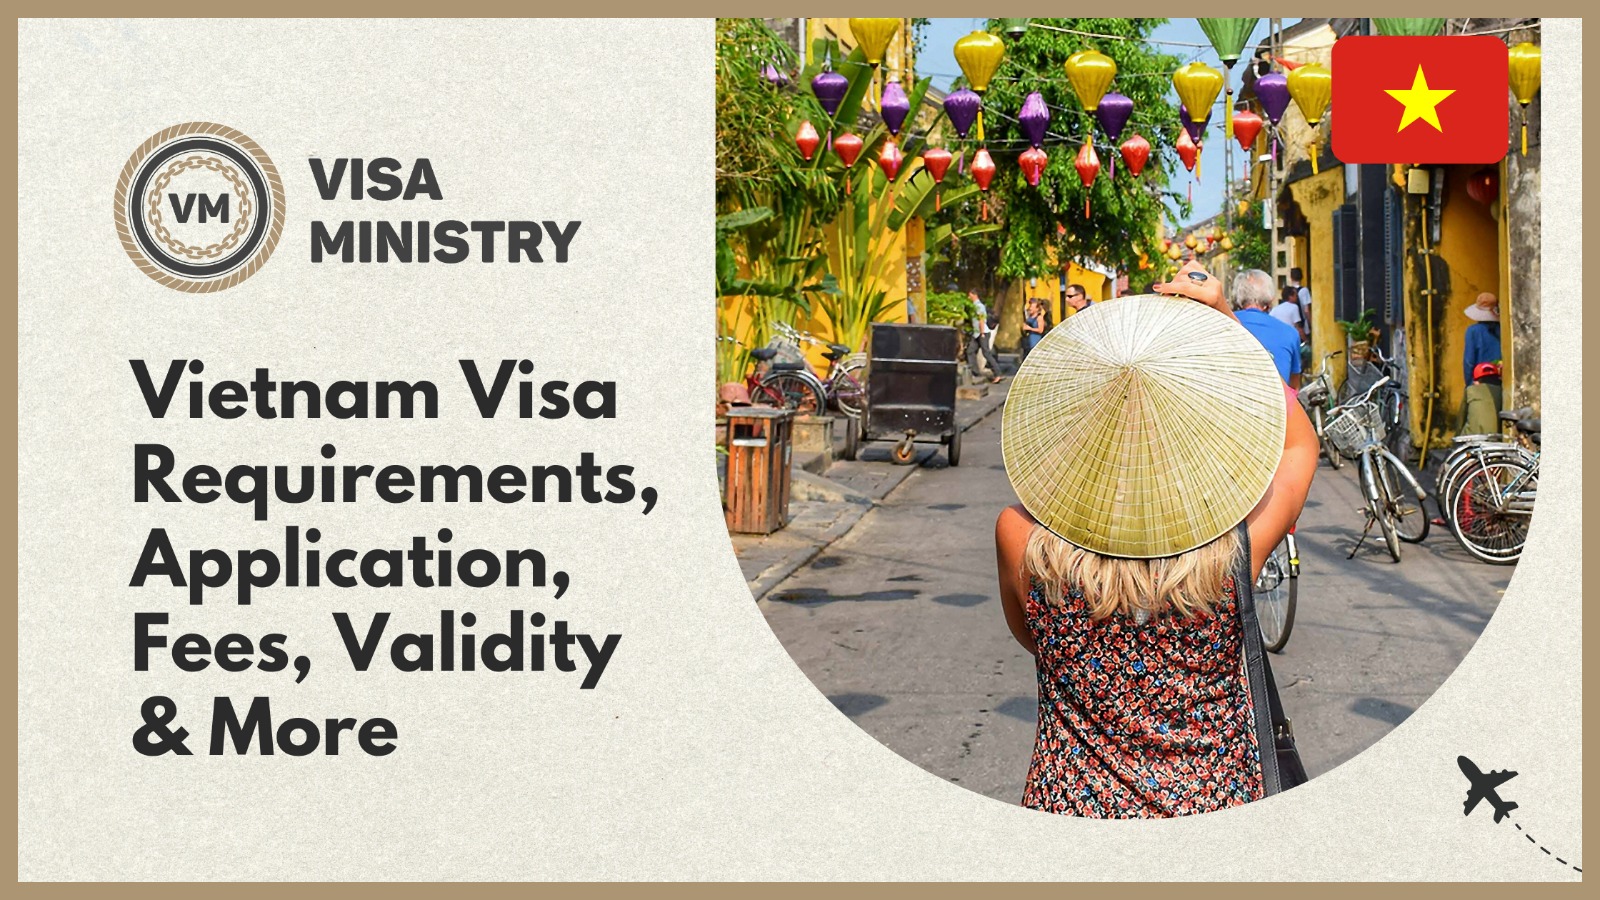 Vietnam Visa Requirements Visa Ministry 0535